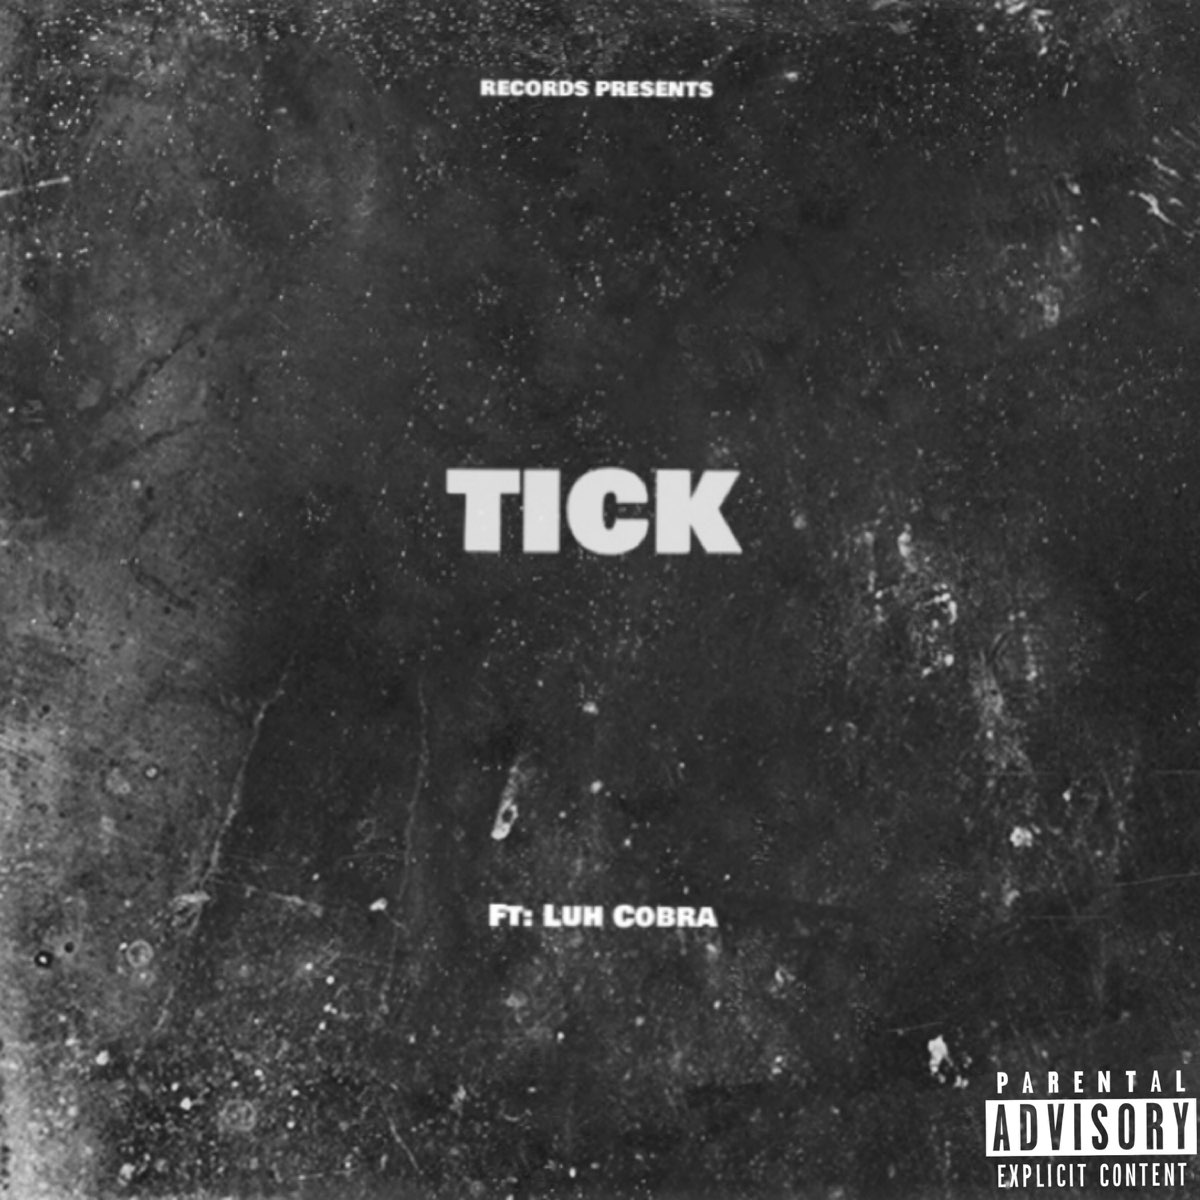 ‎TICK (feat. Luh cobra) - Single by Glock Osama on Apple Music